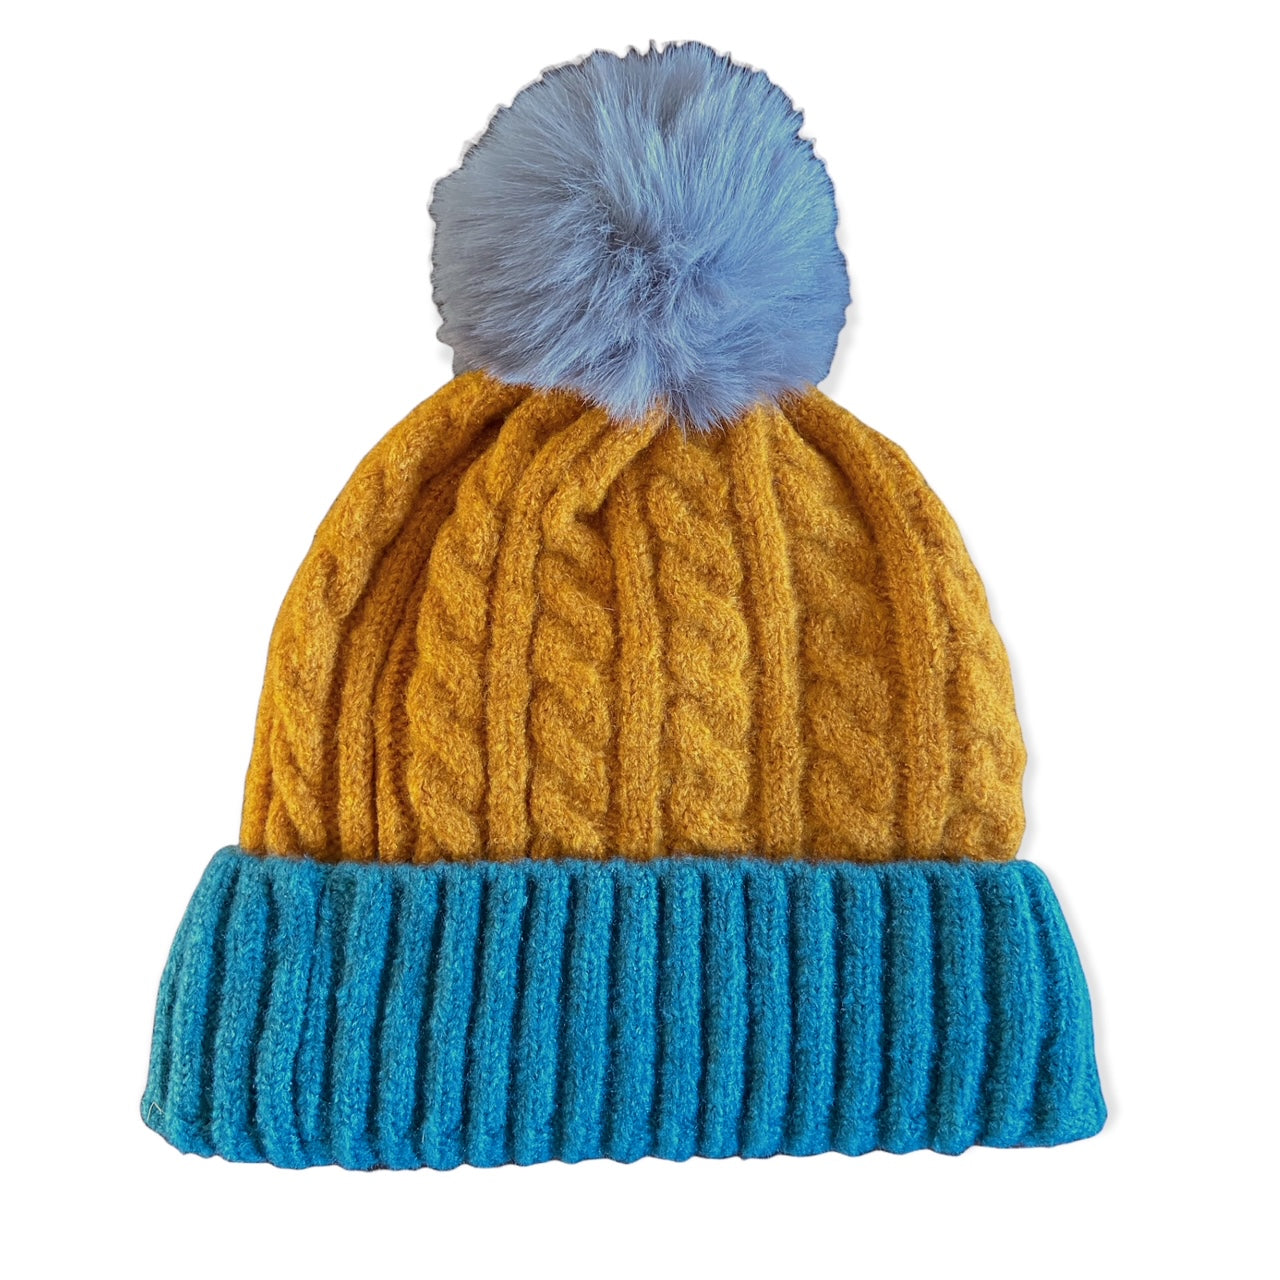 cozy winter hat